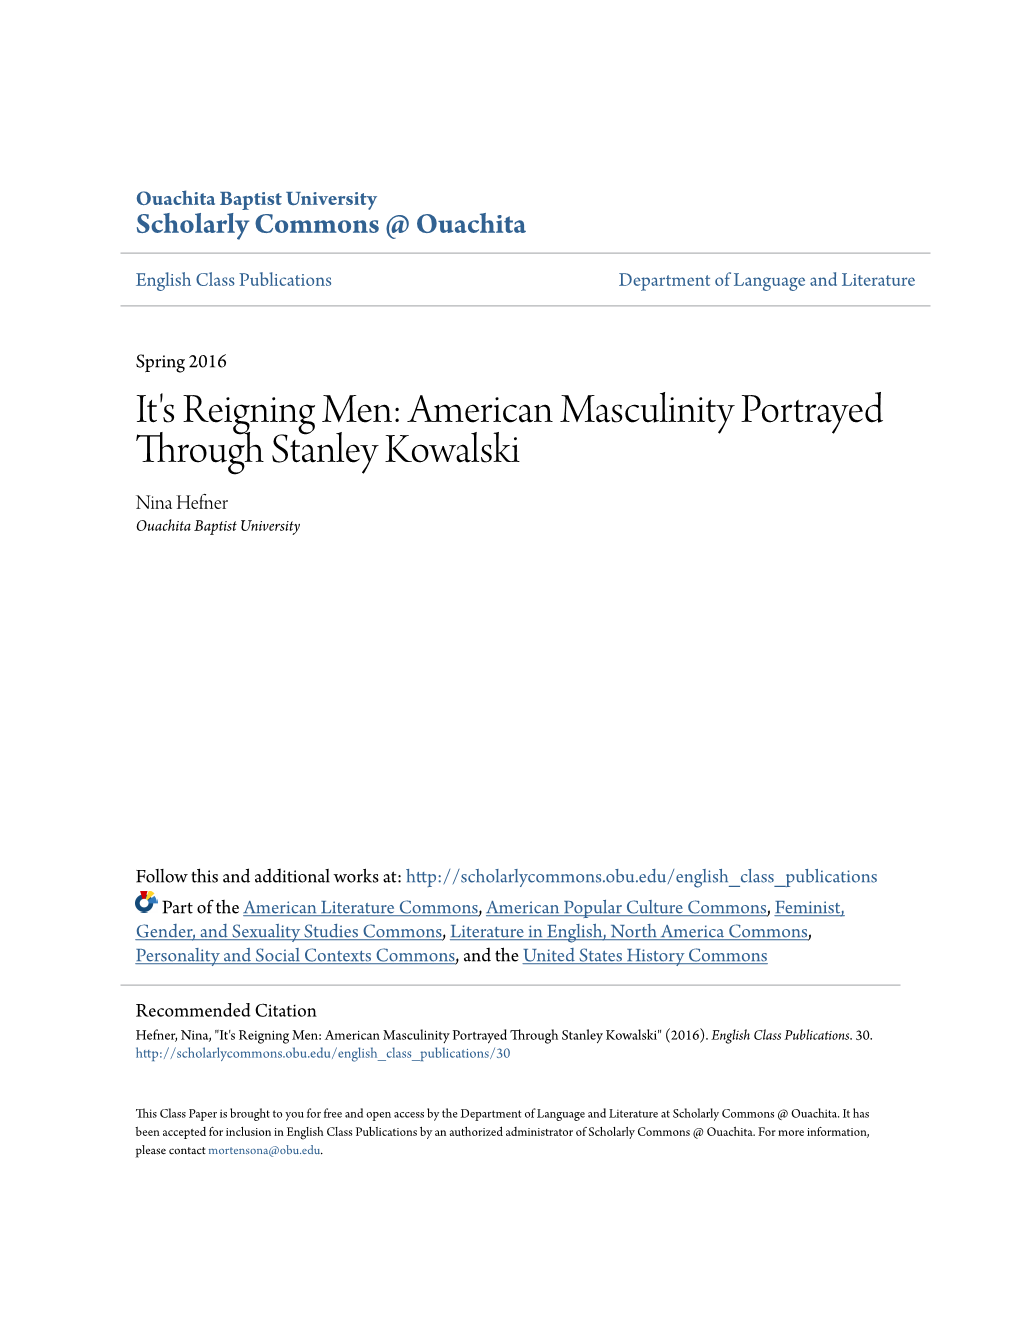 American Masculinity Portrayed Through Stanley Kowalski Nina Hefner Ouachita Baptist University